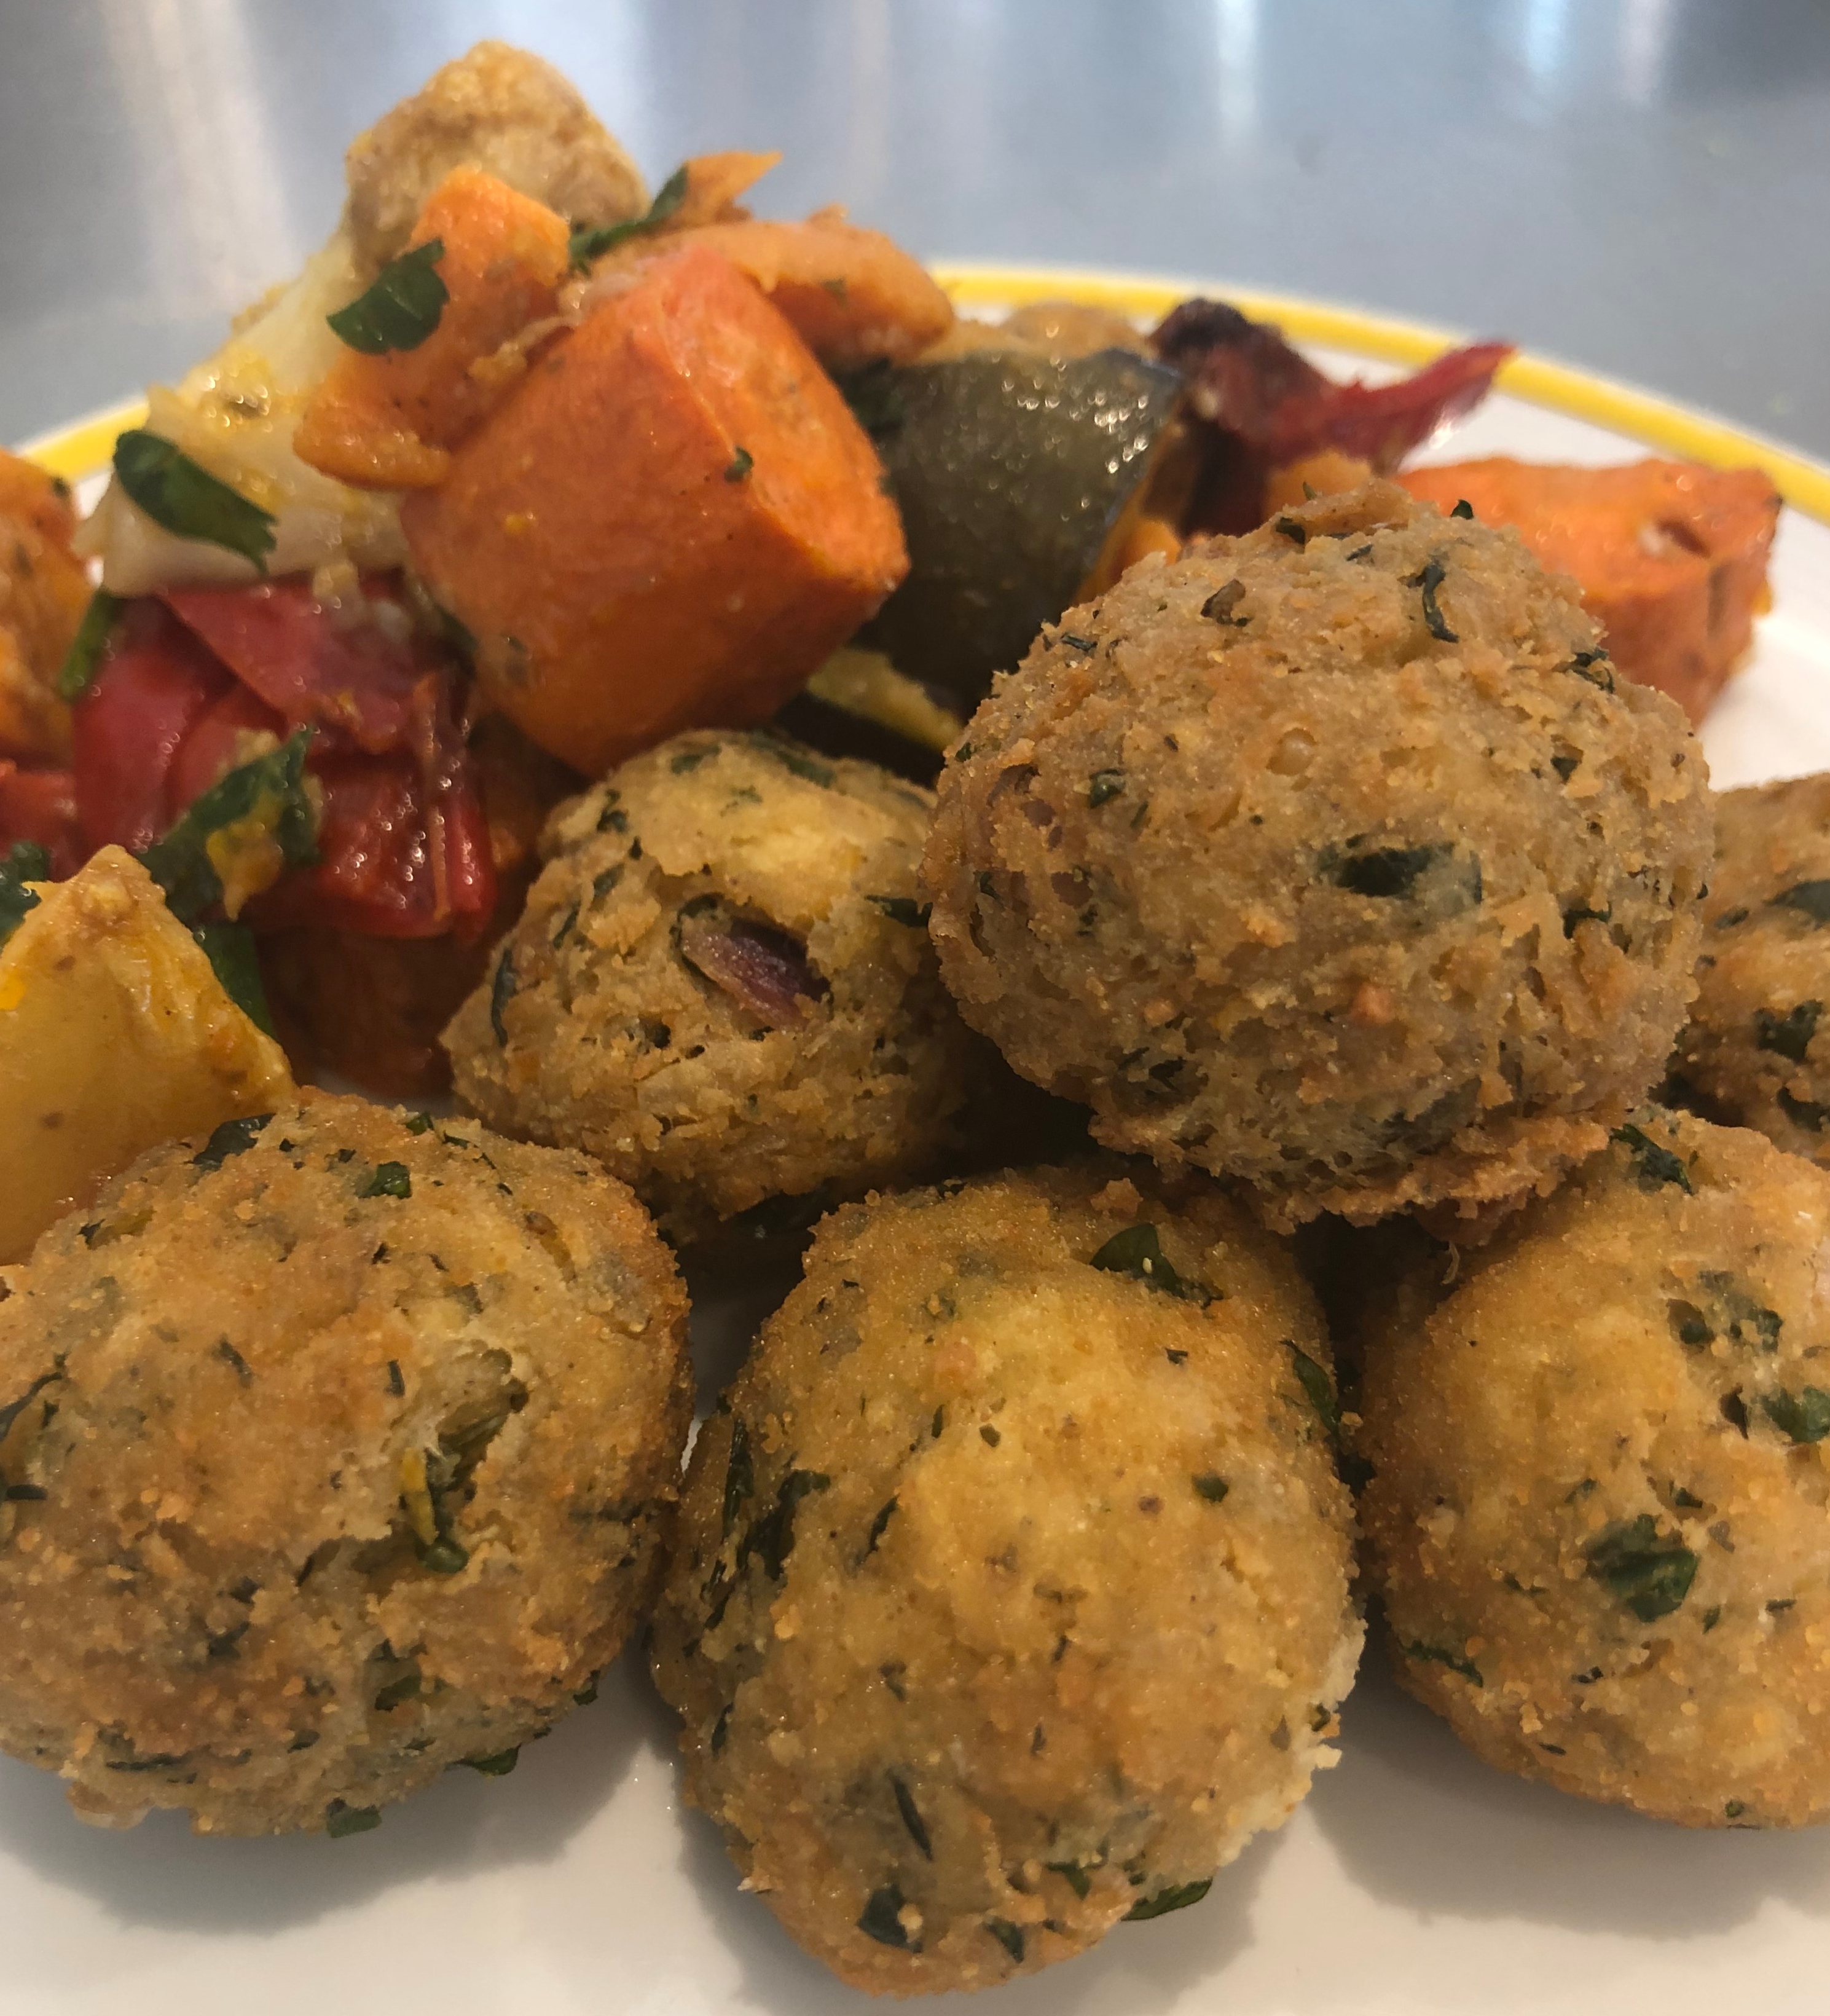 Arancini balls with roast veggies on a plate